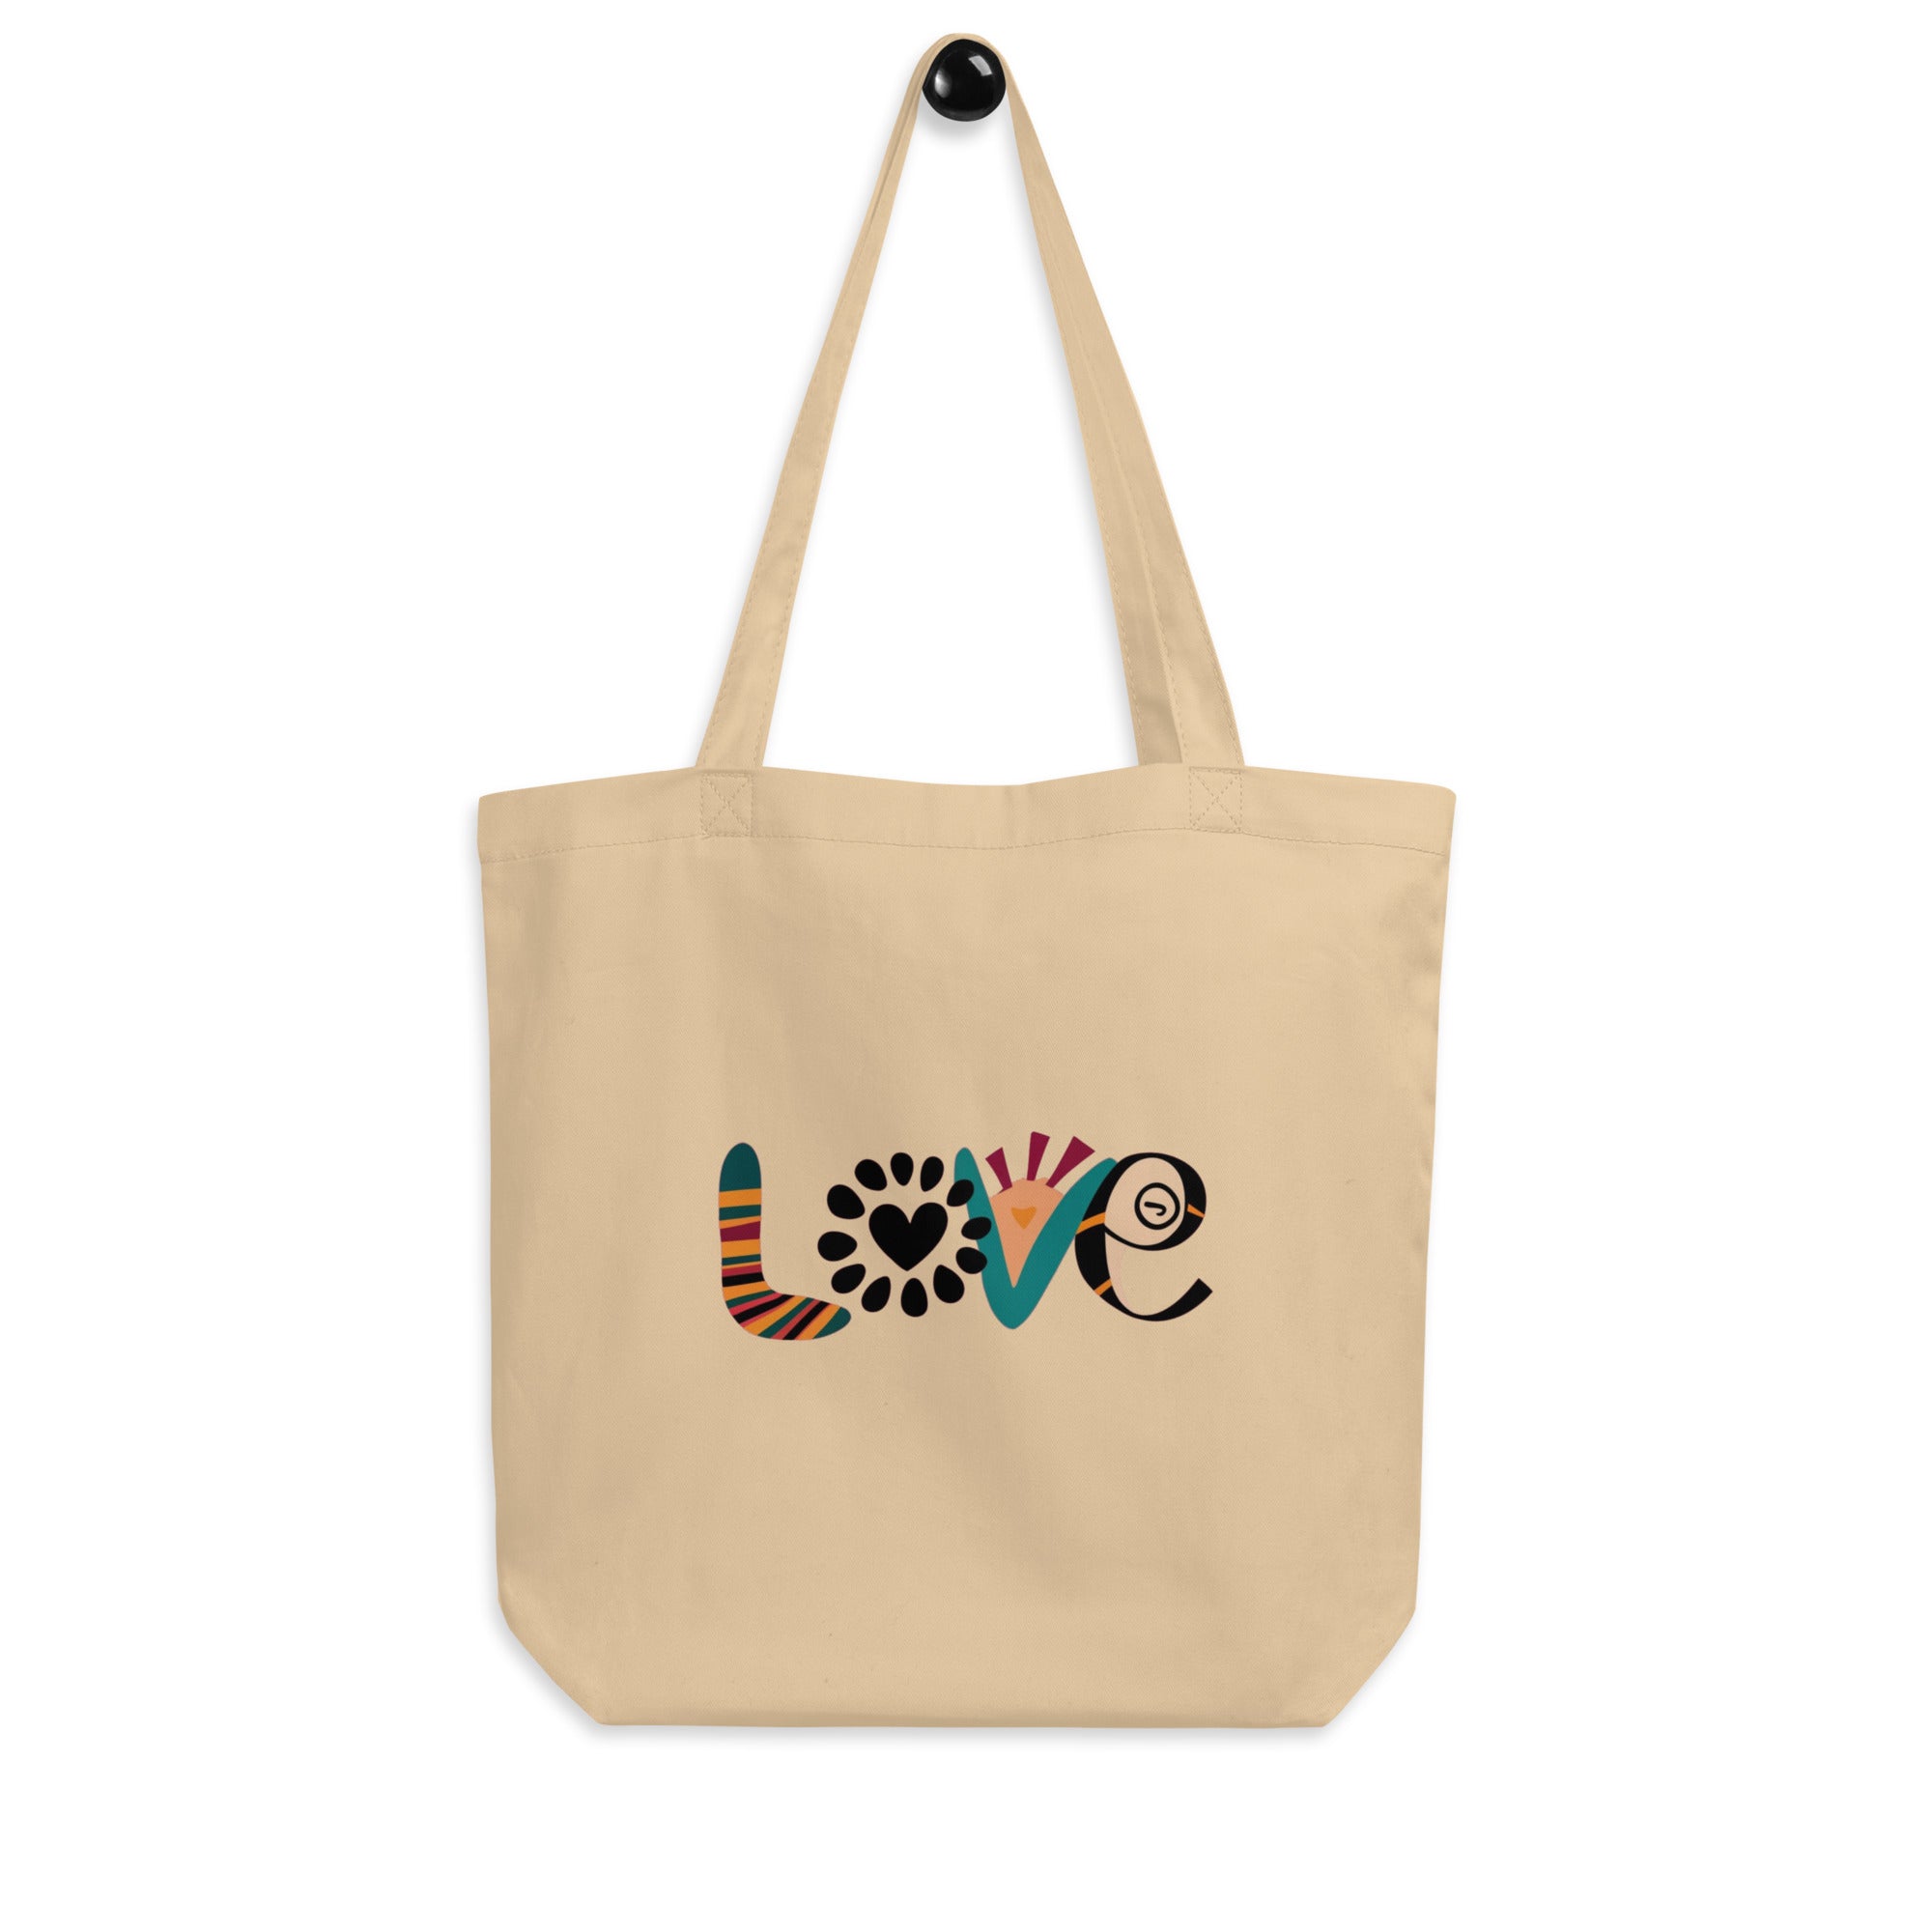 "Love" Eco Tote Bag